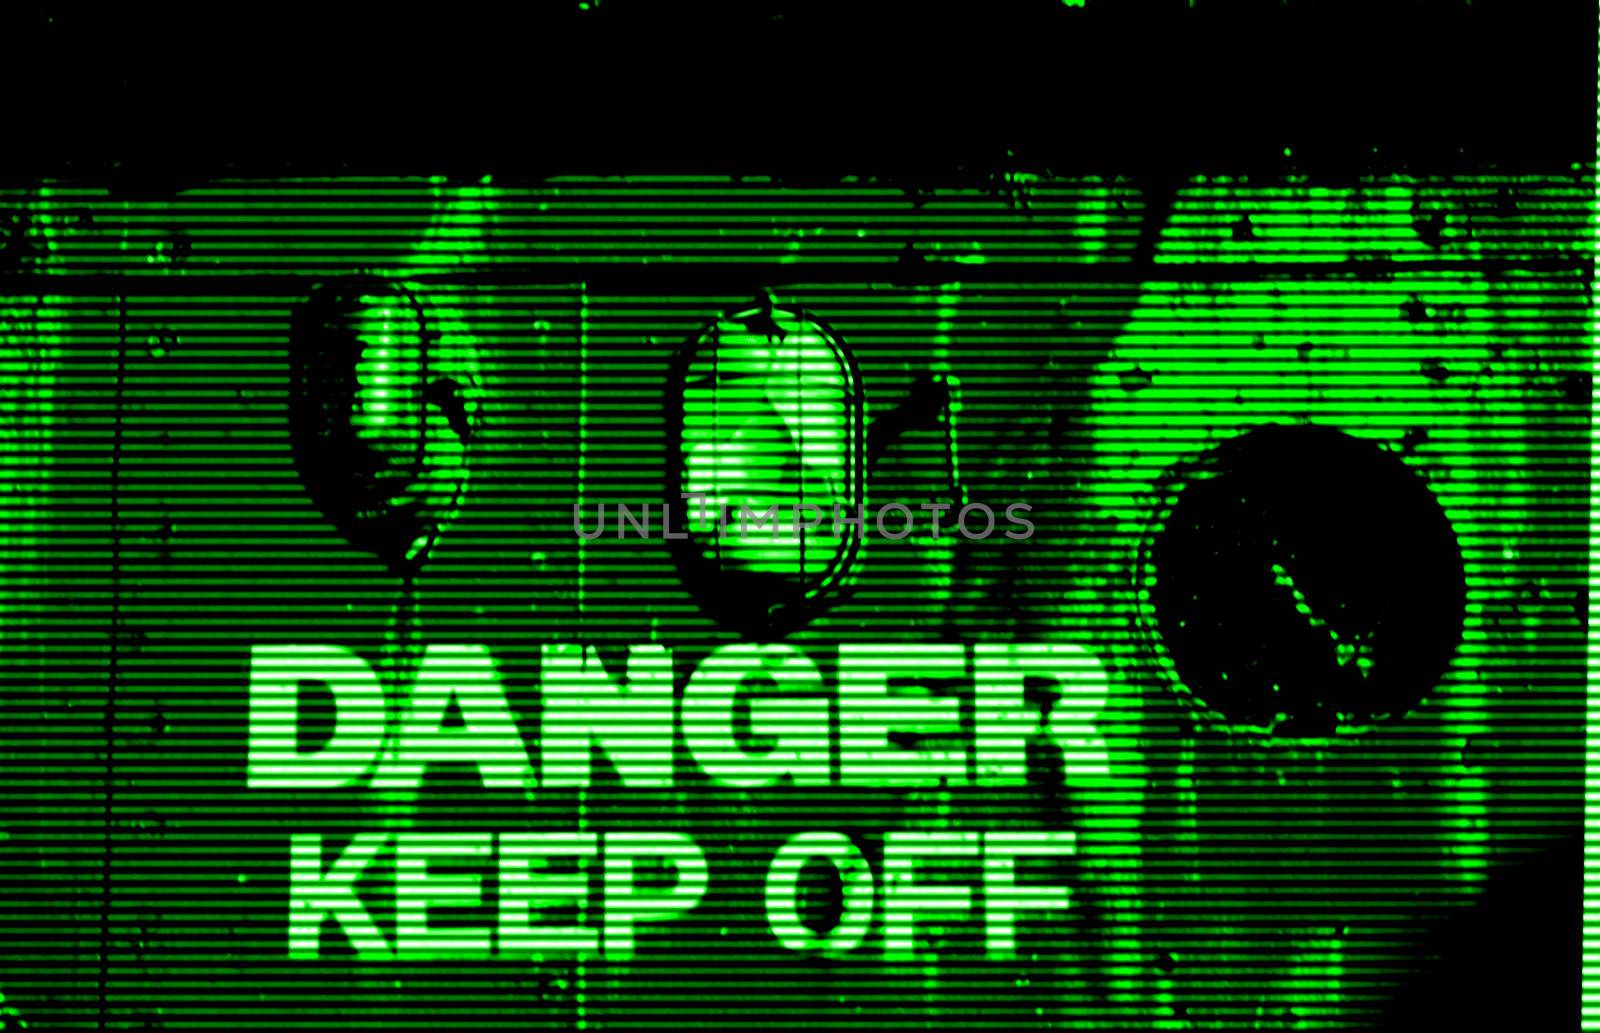 danger keep off night vision